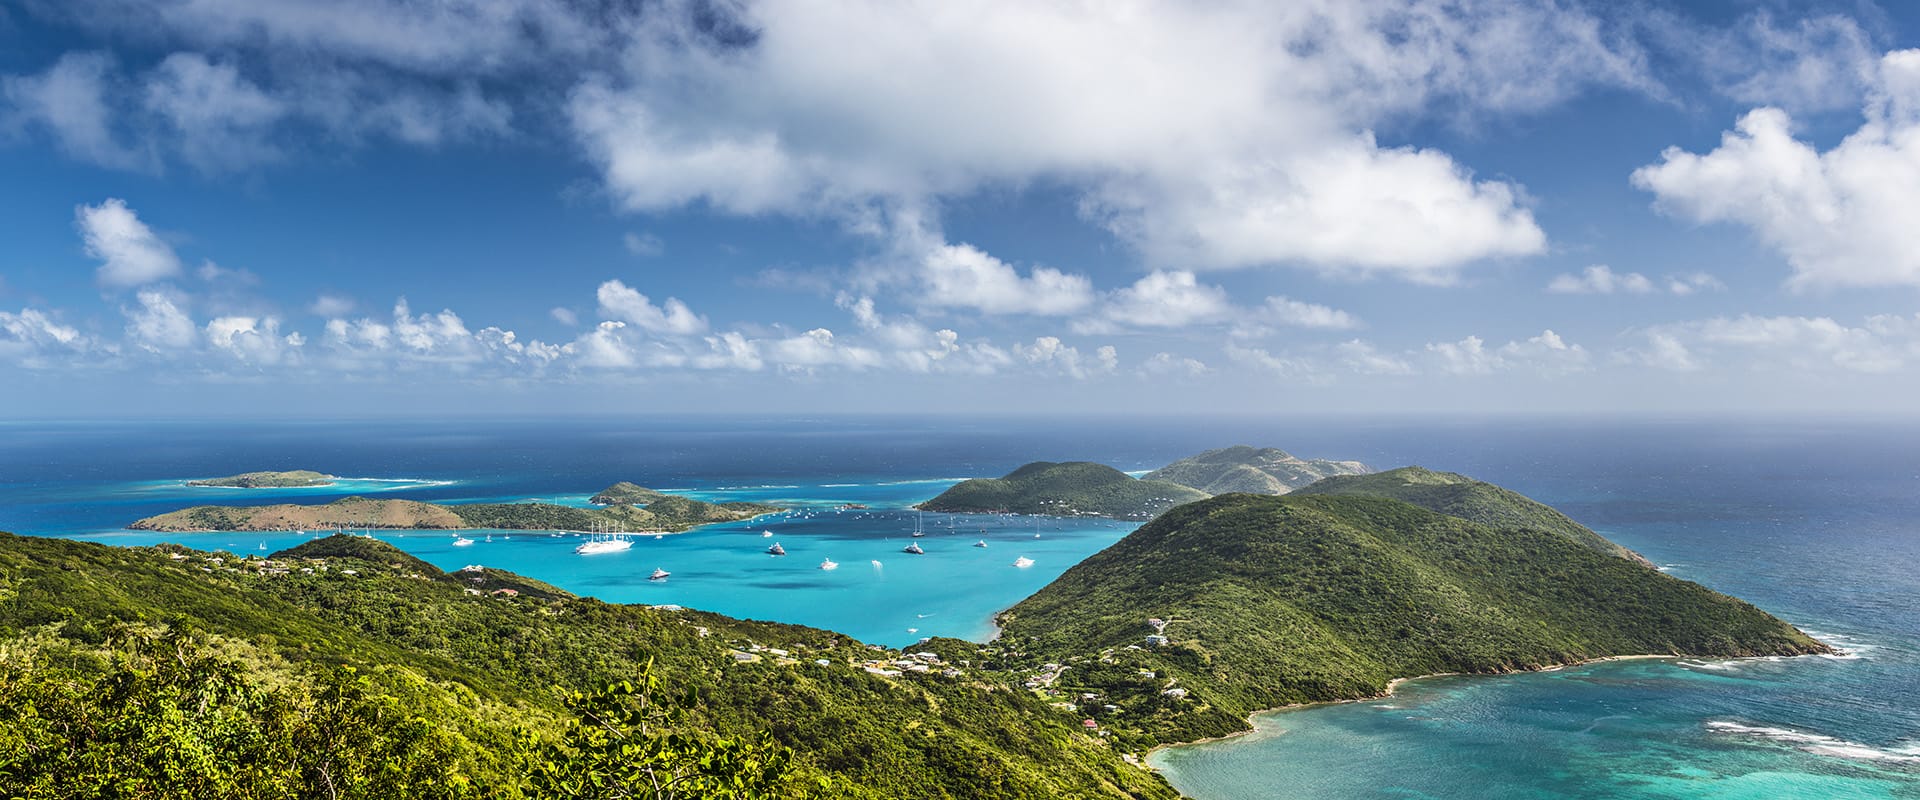 British Virgin Islands - Yacht Charter Destinations